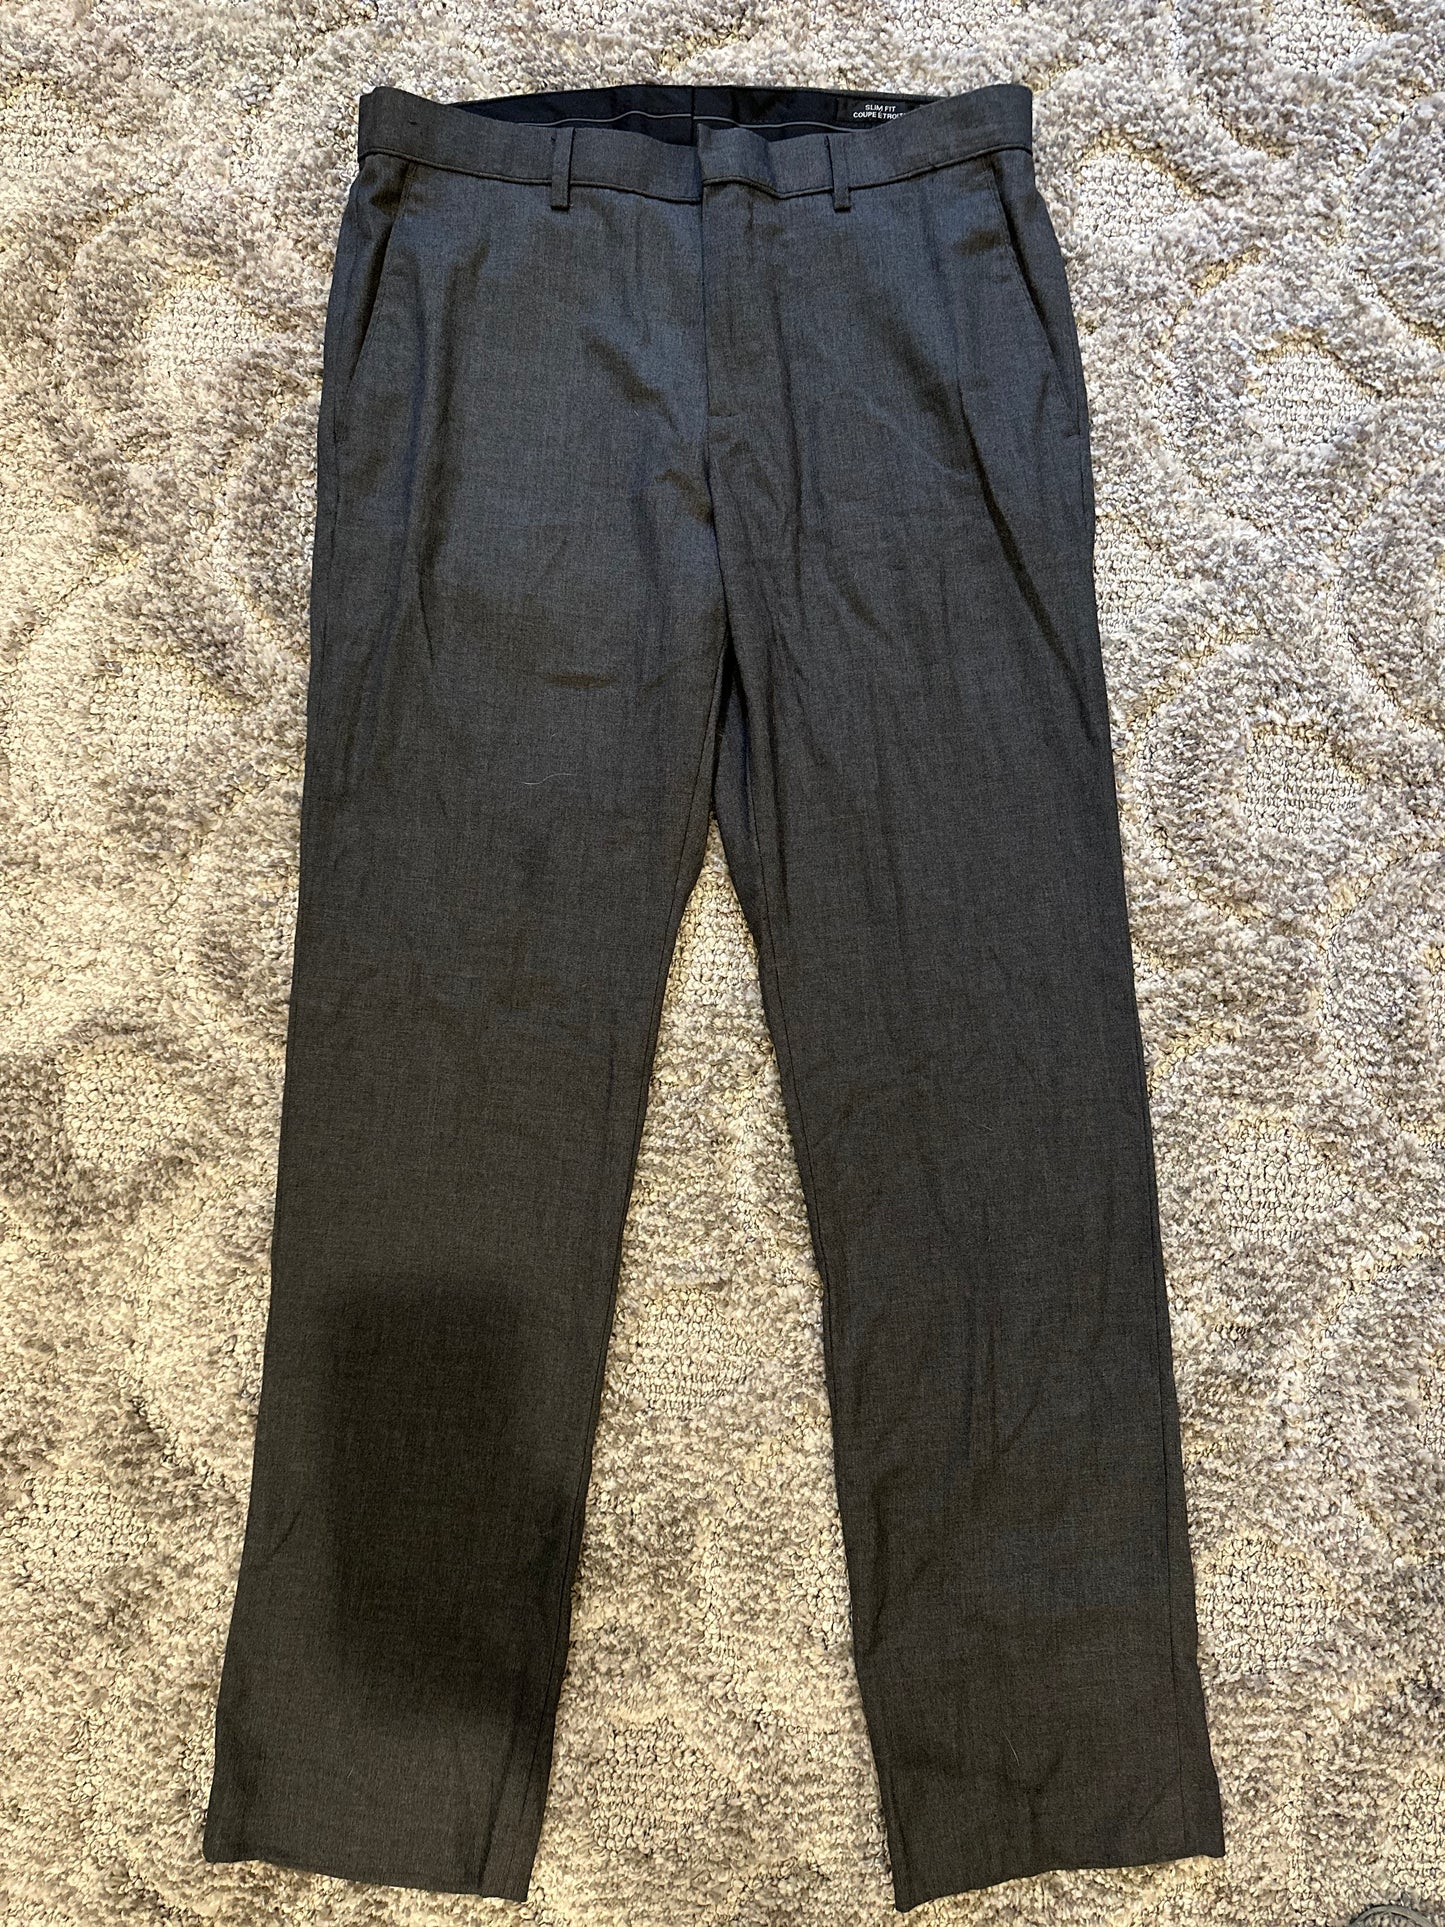 Mossimo Dress Pants - Men's 32x32